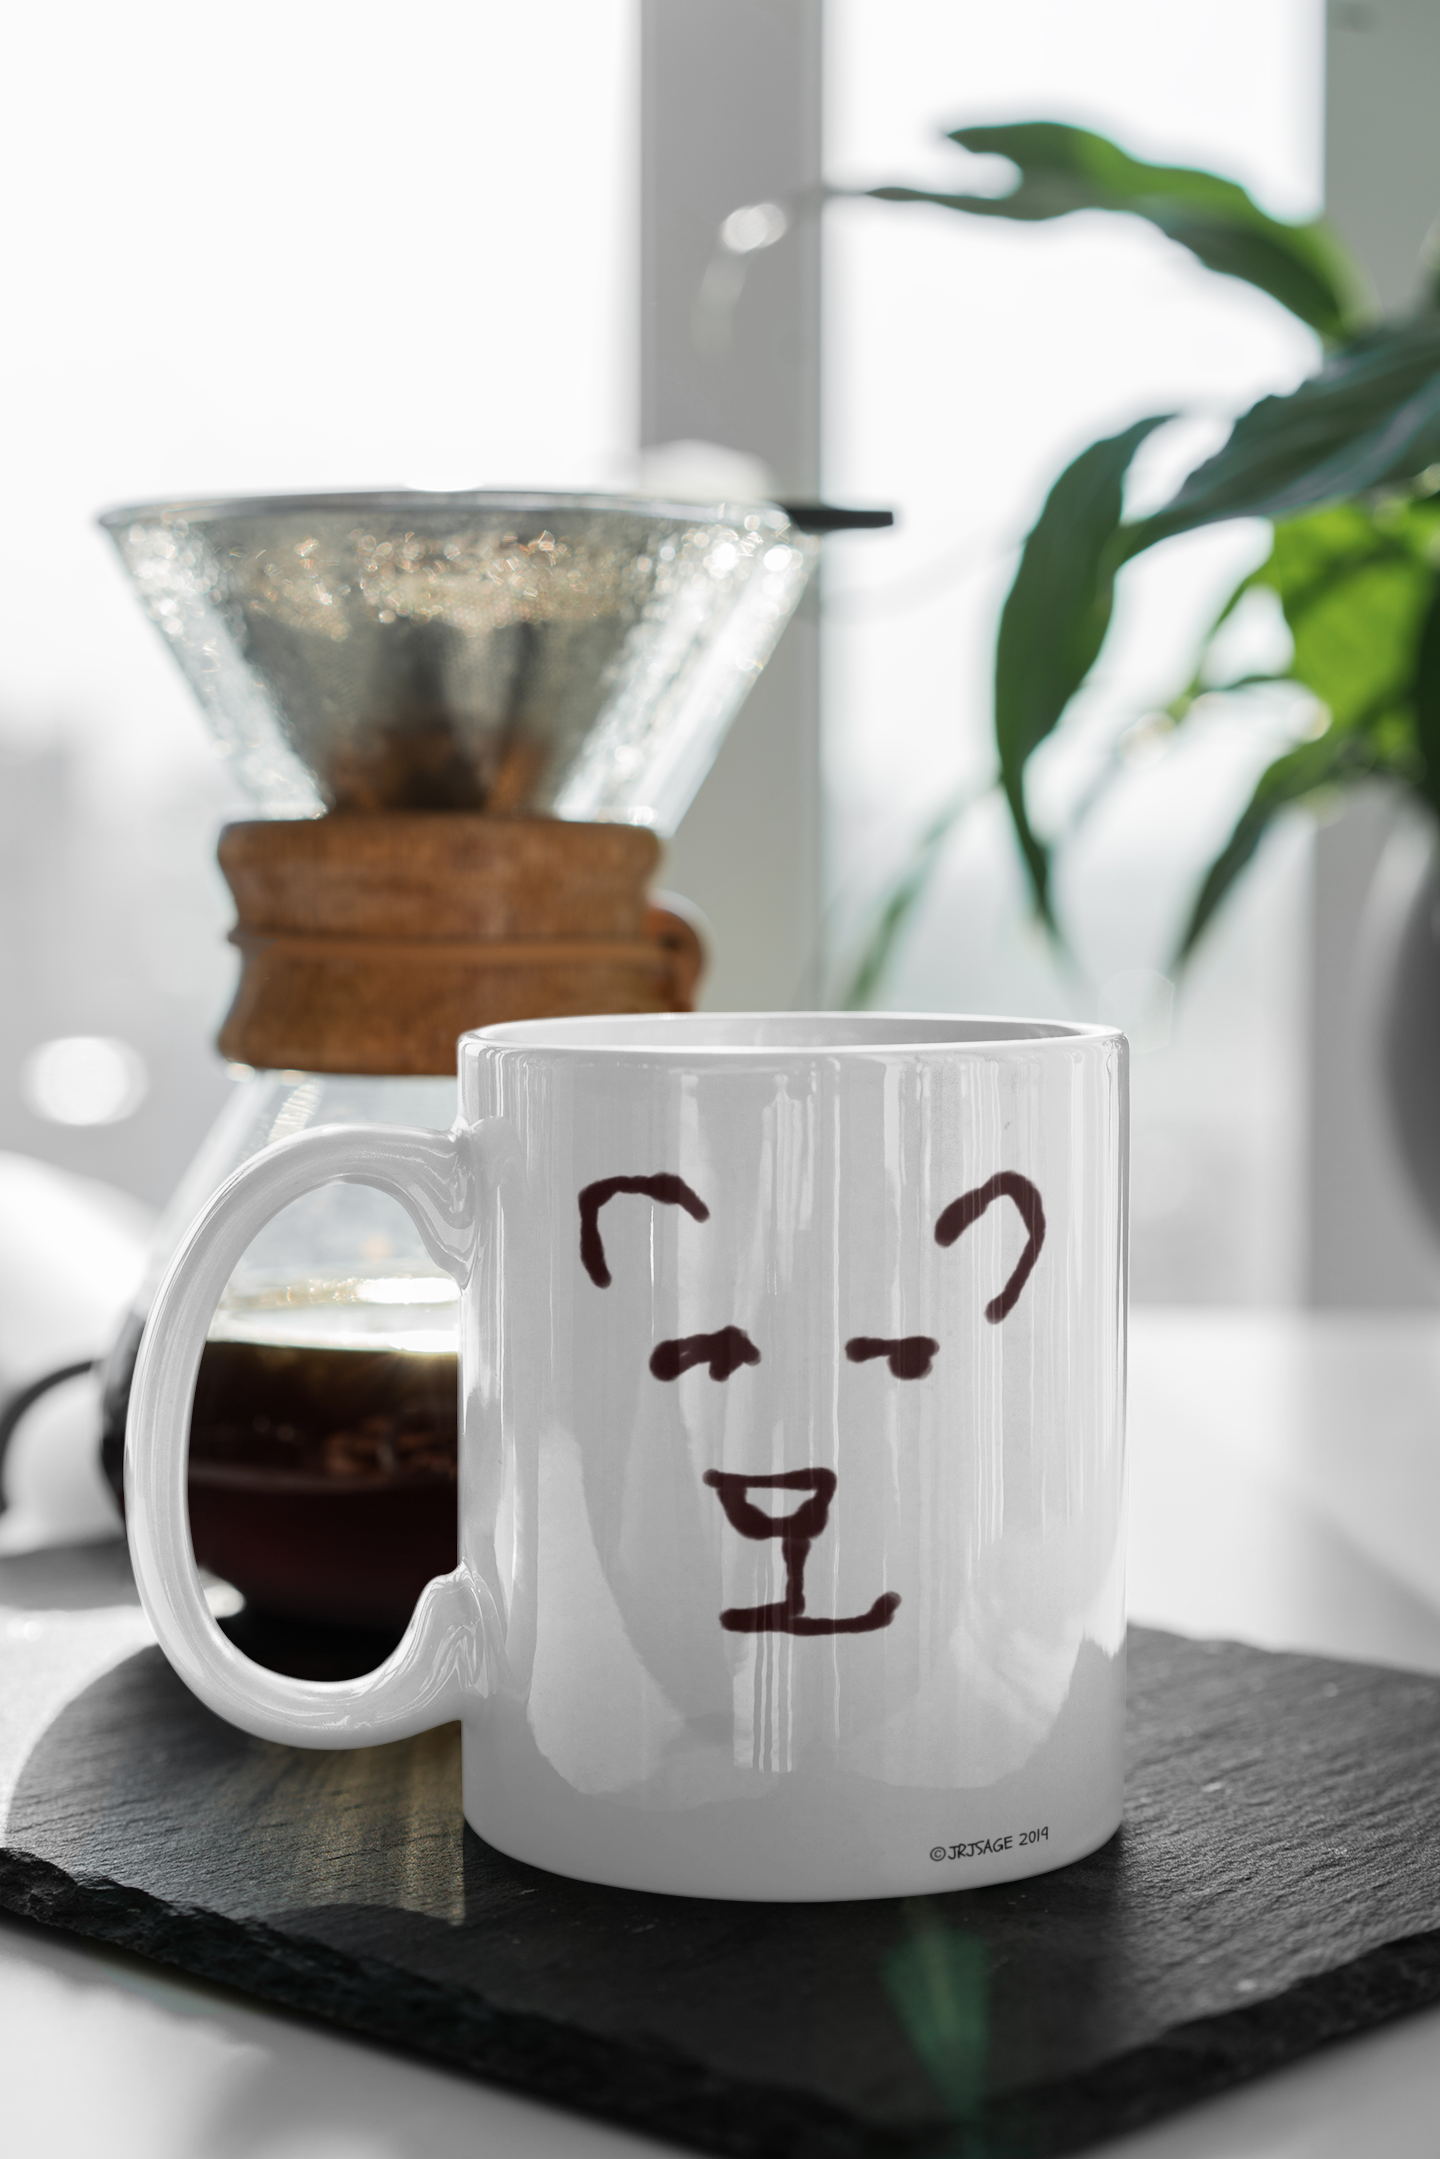 Polar Bear coffee mug on kitchen table - Cute illustrated bear mugs by Hector and Bone